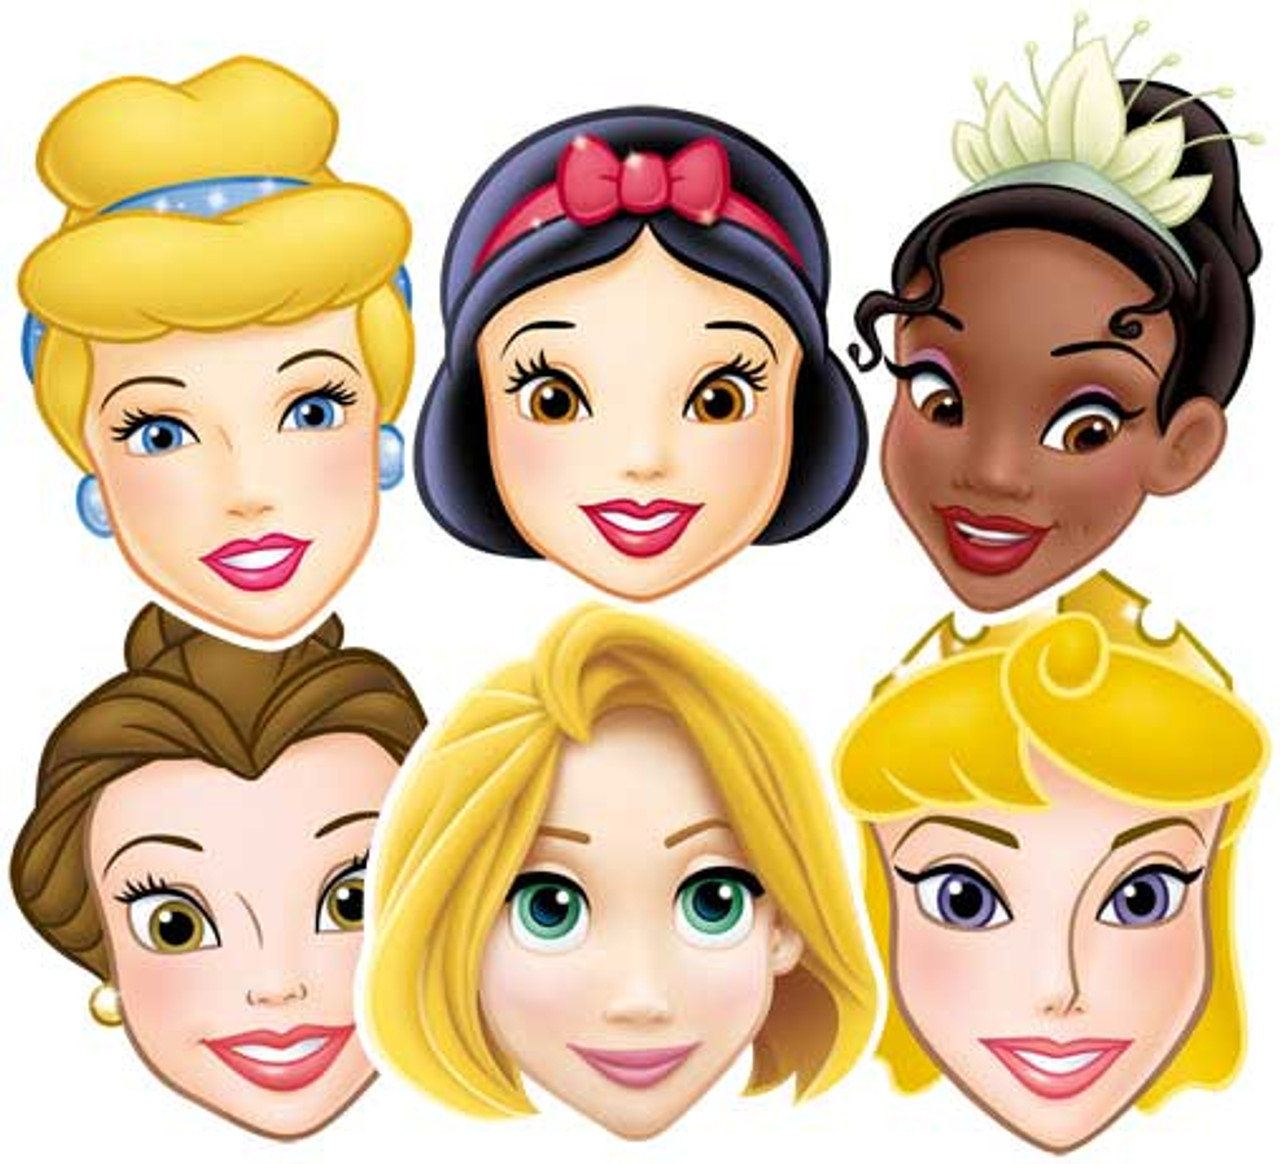 Snow White Vs Cinderella: Who Leads The Princesses? 